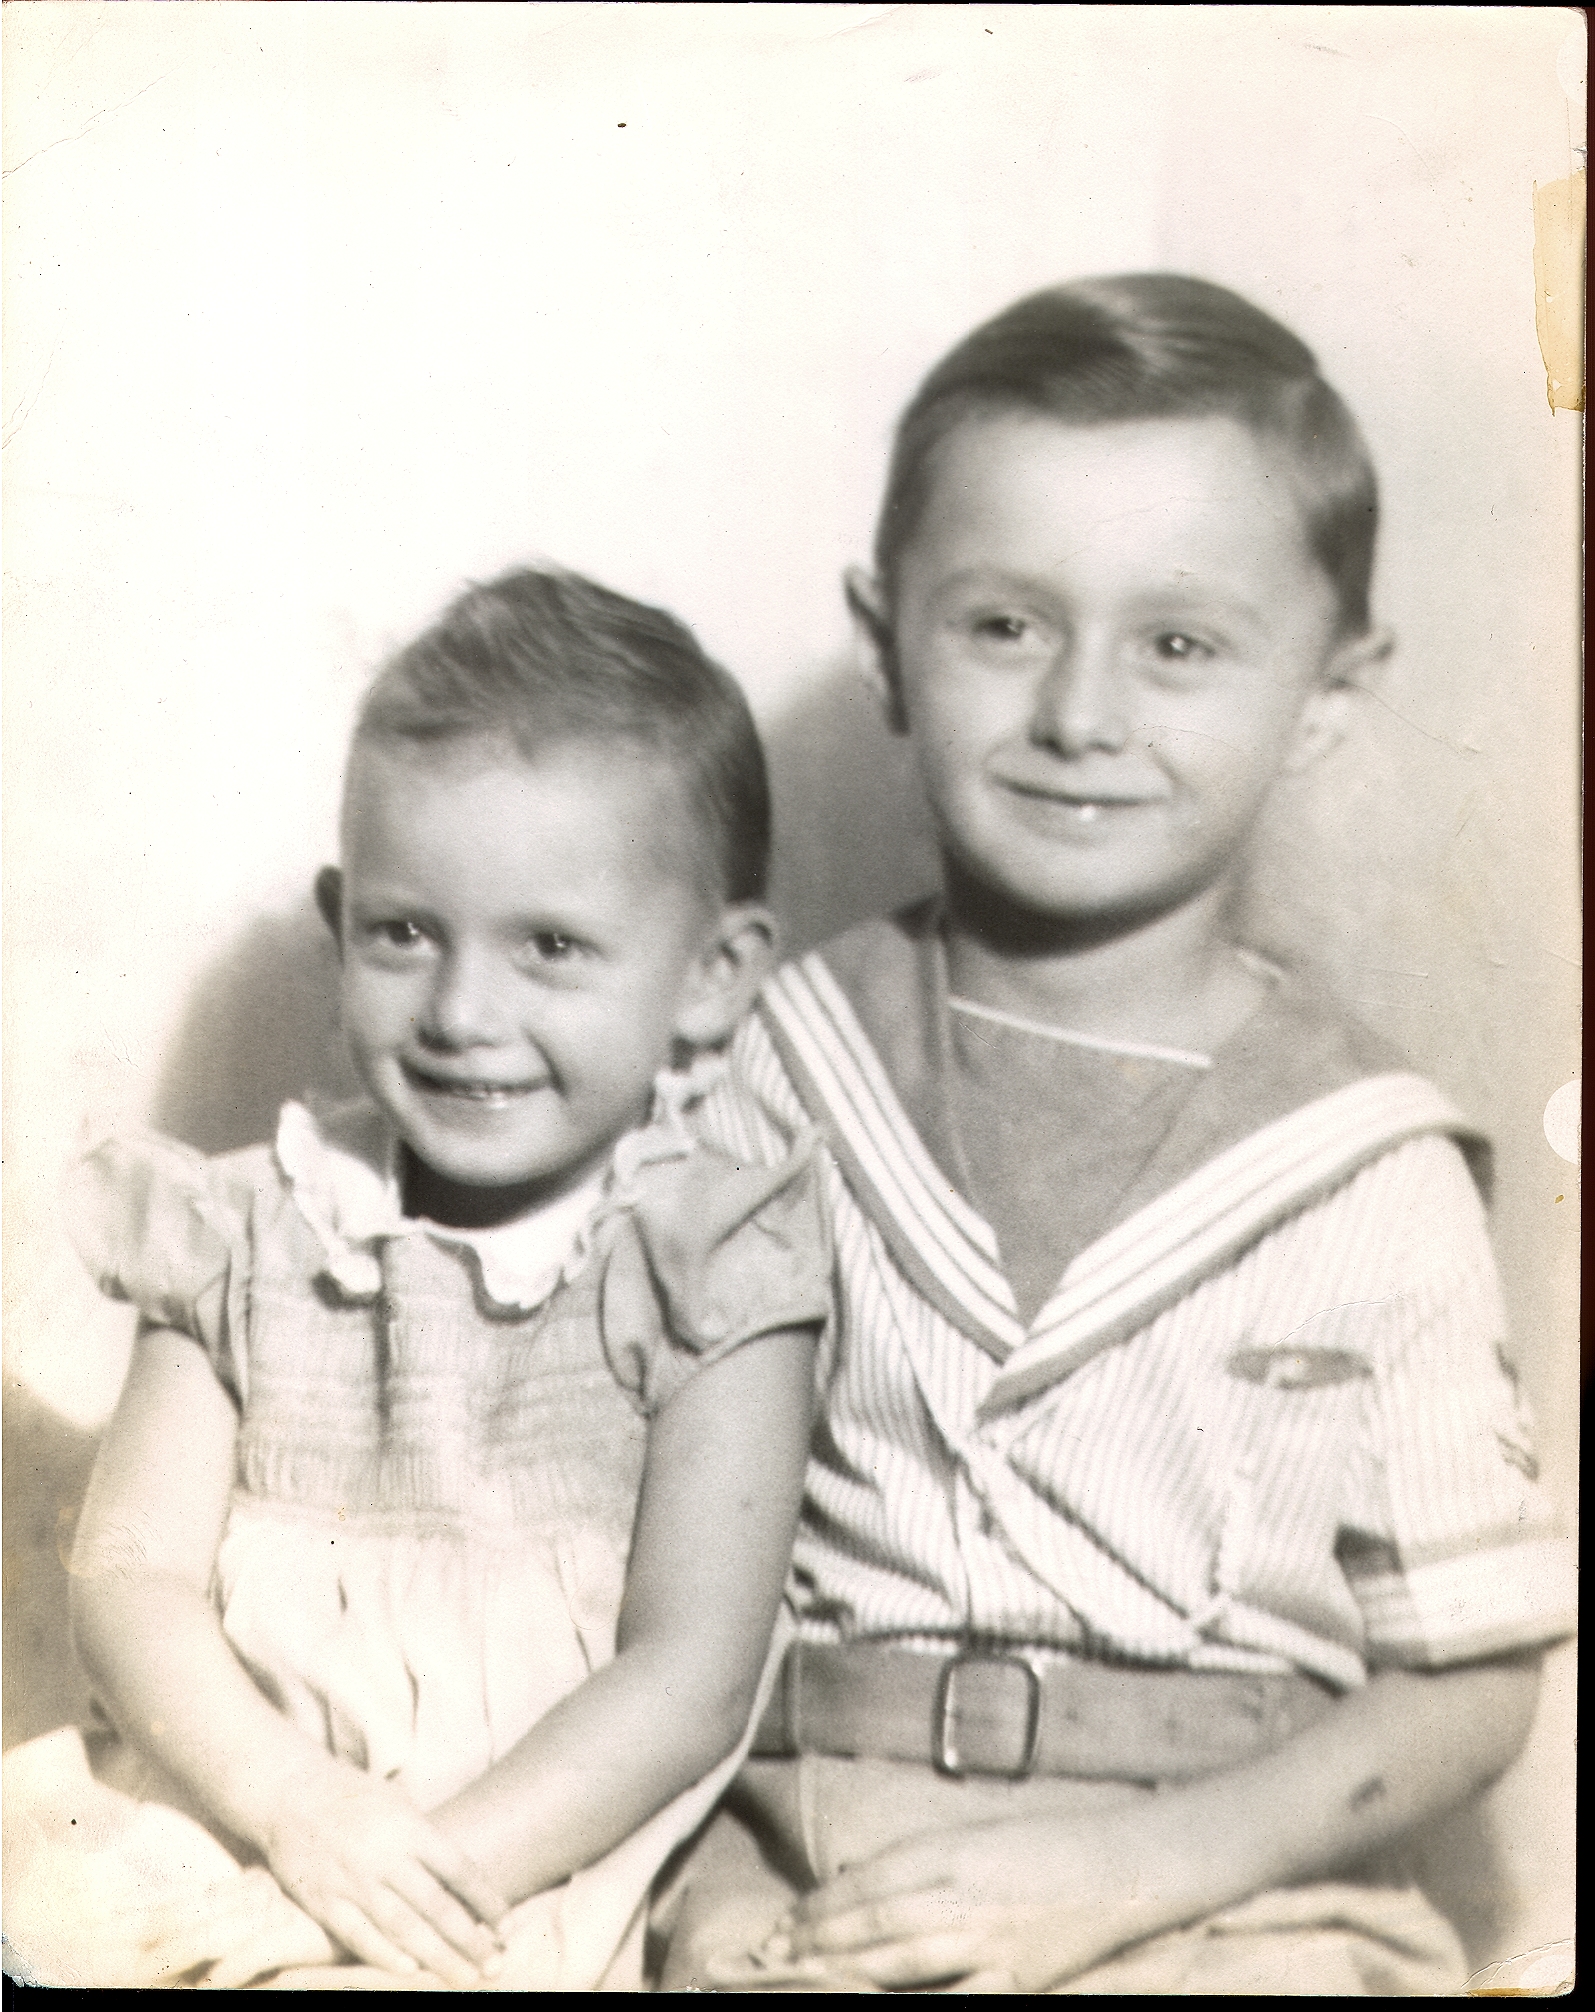 Beverly Ann Rudolph and her brother John Mason Rudolph Jr.